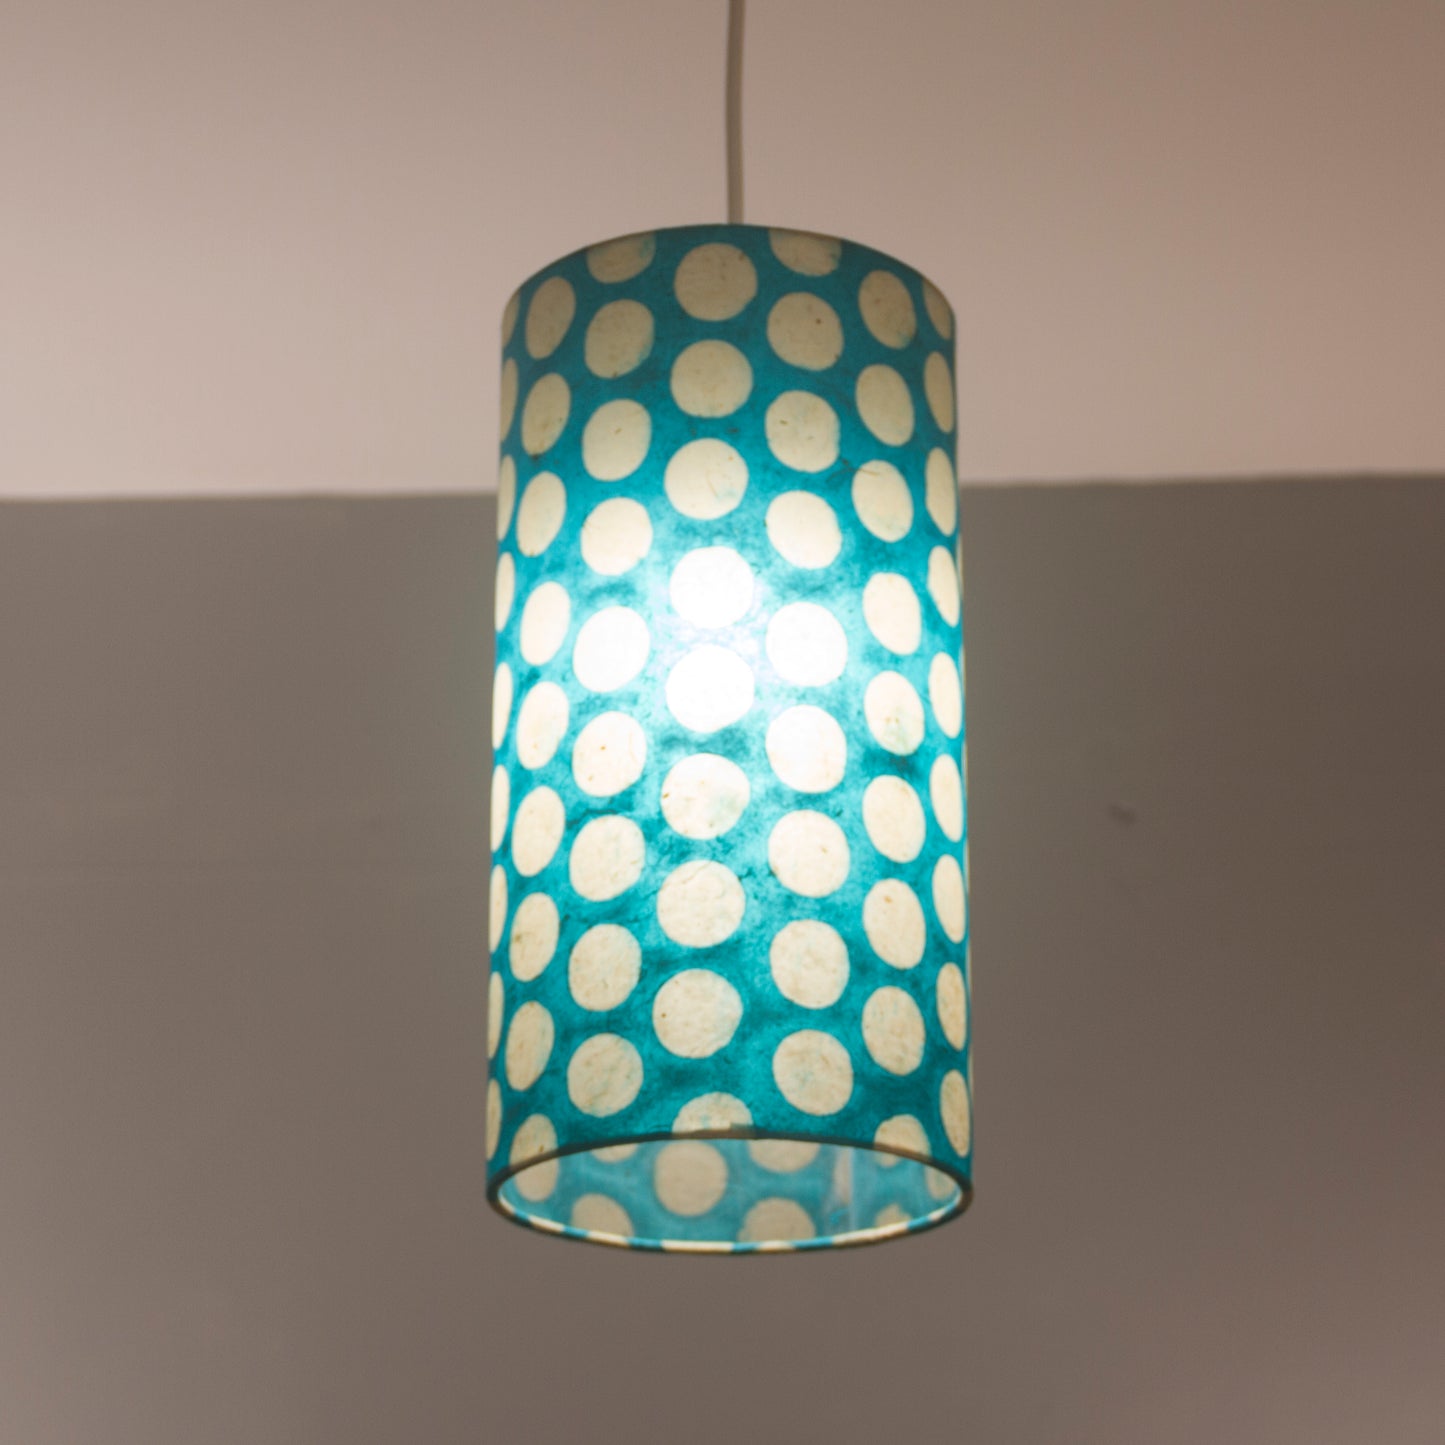 Oval Lamp Shade - P97 - Batik Dots on Cyan, 30cm(w) x 20cm(h) x 22cm(d)